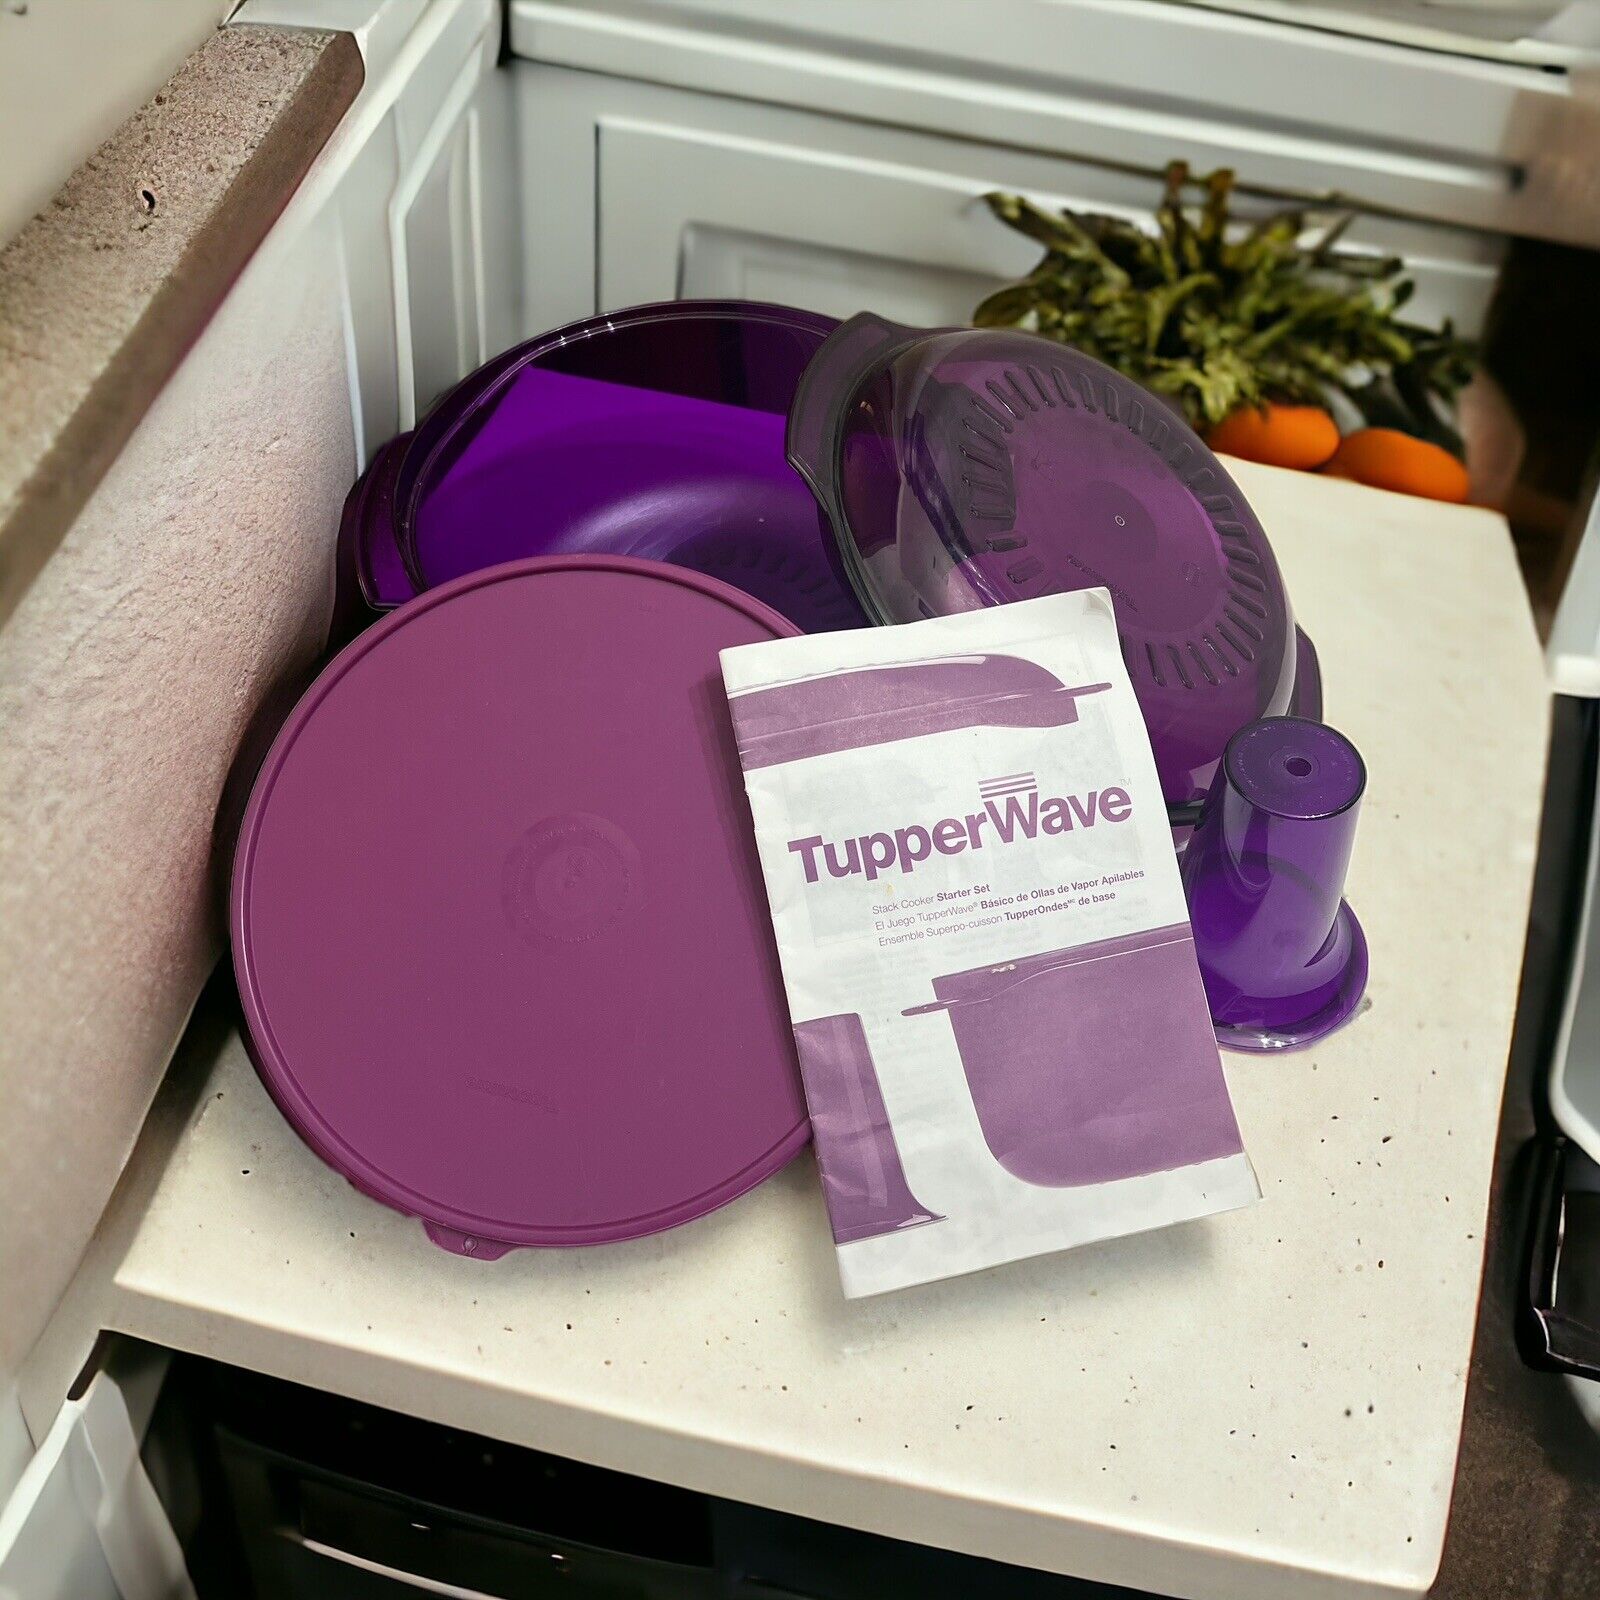 4 Piece Tupperware Tupperwave Stack Cooker Starter Set- Purple 